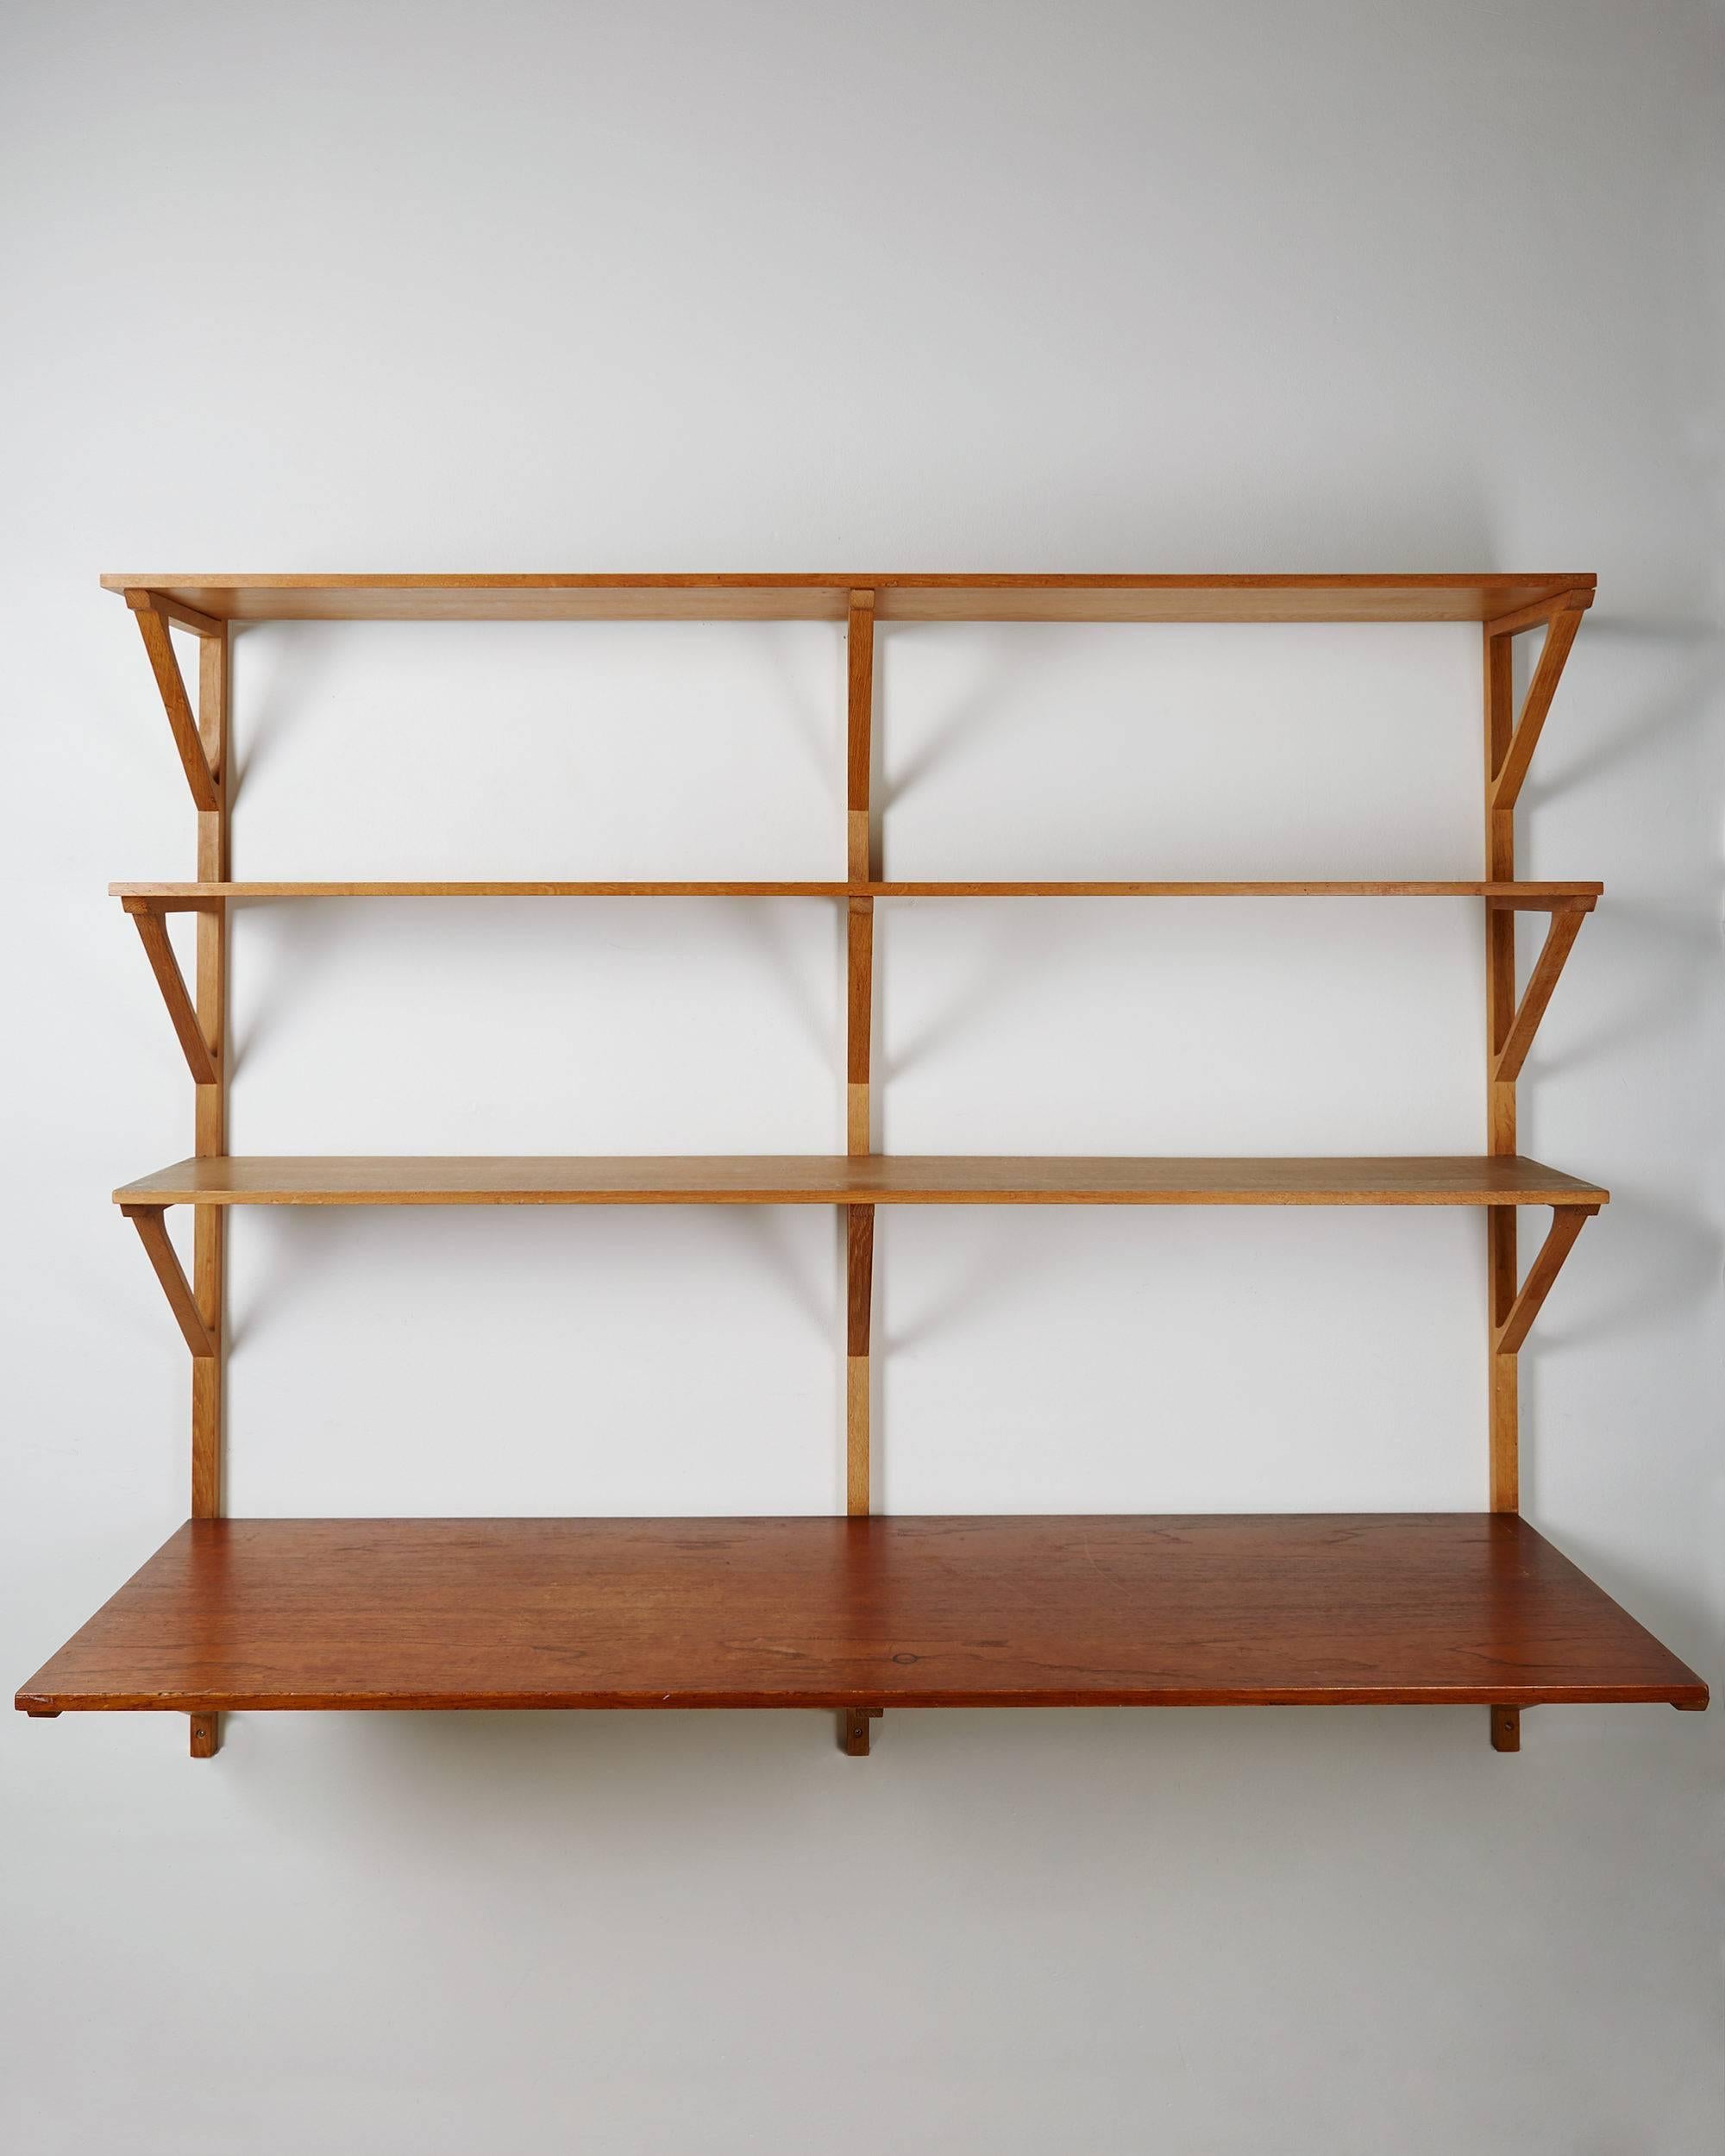 Scandinavian Modern Book Shelves Designed by Börge Mogensen for Erhard Rasmussen